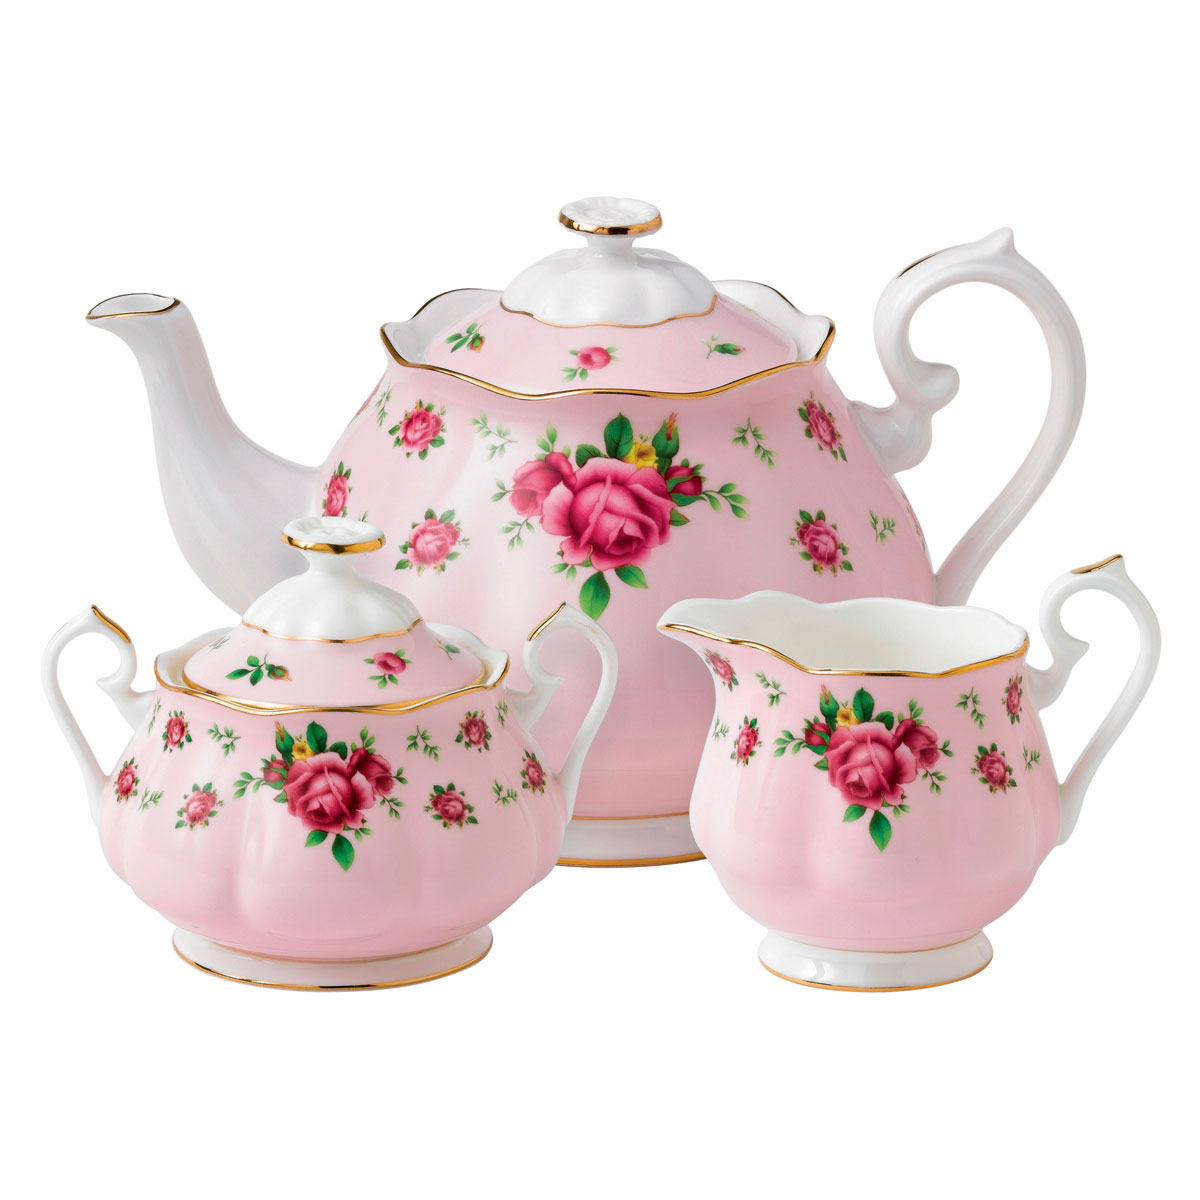 Royal Albert New Country Roses Pink Teapot, Sugar and Creamer Set